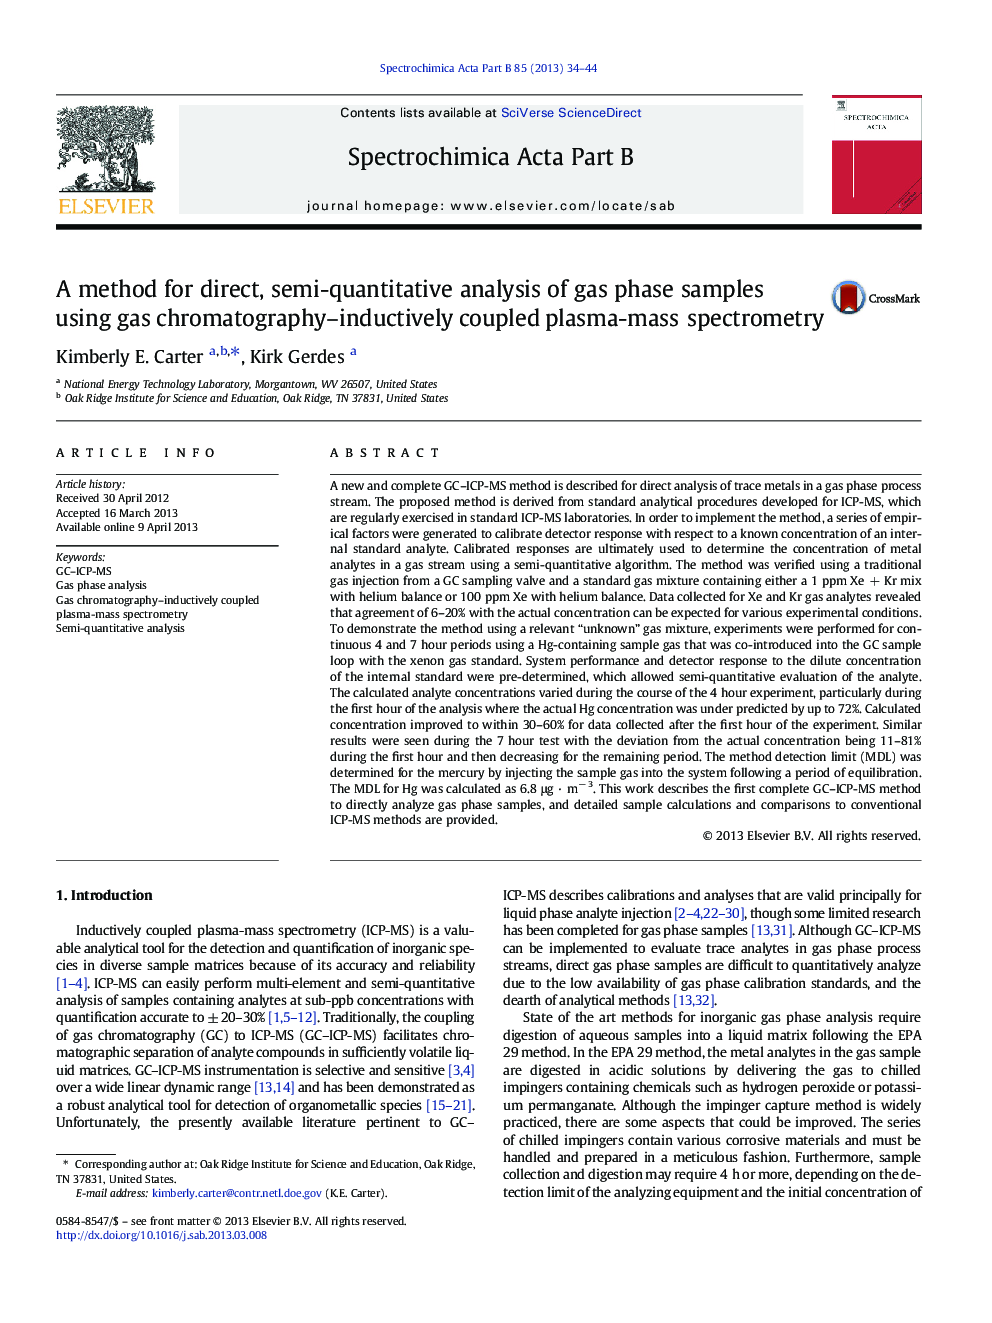 A method for direct, semi-quantitative analysis of gas phase samples using gas chromatography–inductively coupled plasma-mass spectrometry